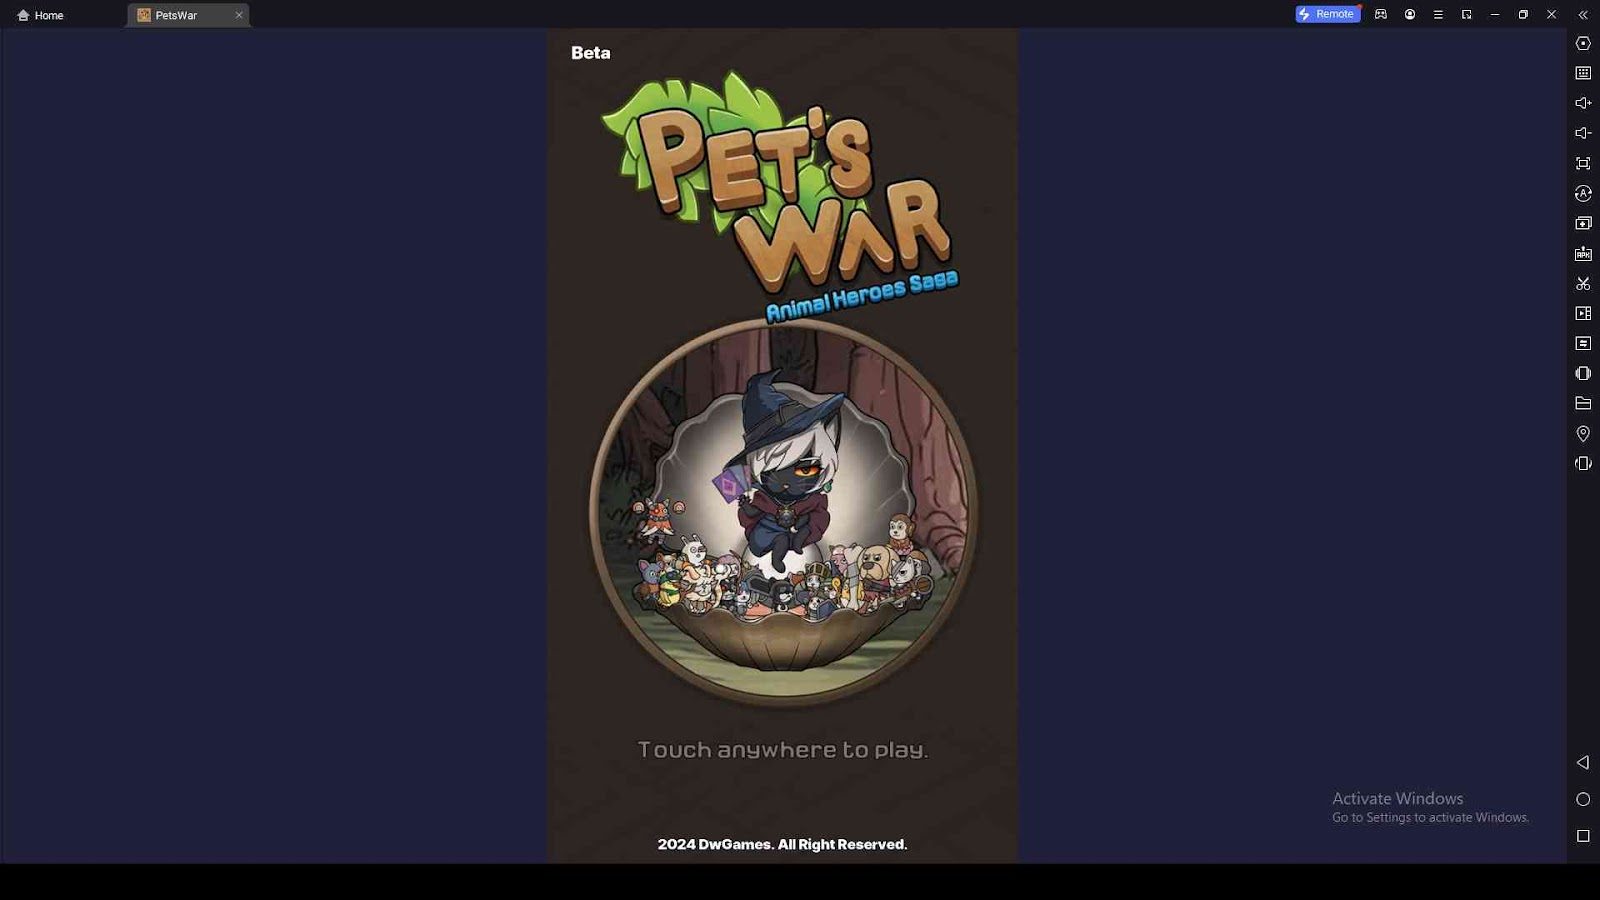 The Pet's War: Animal Heroes Saga Codes